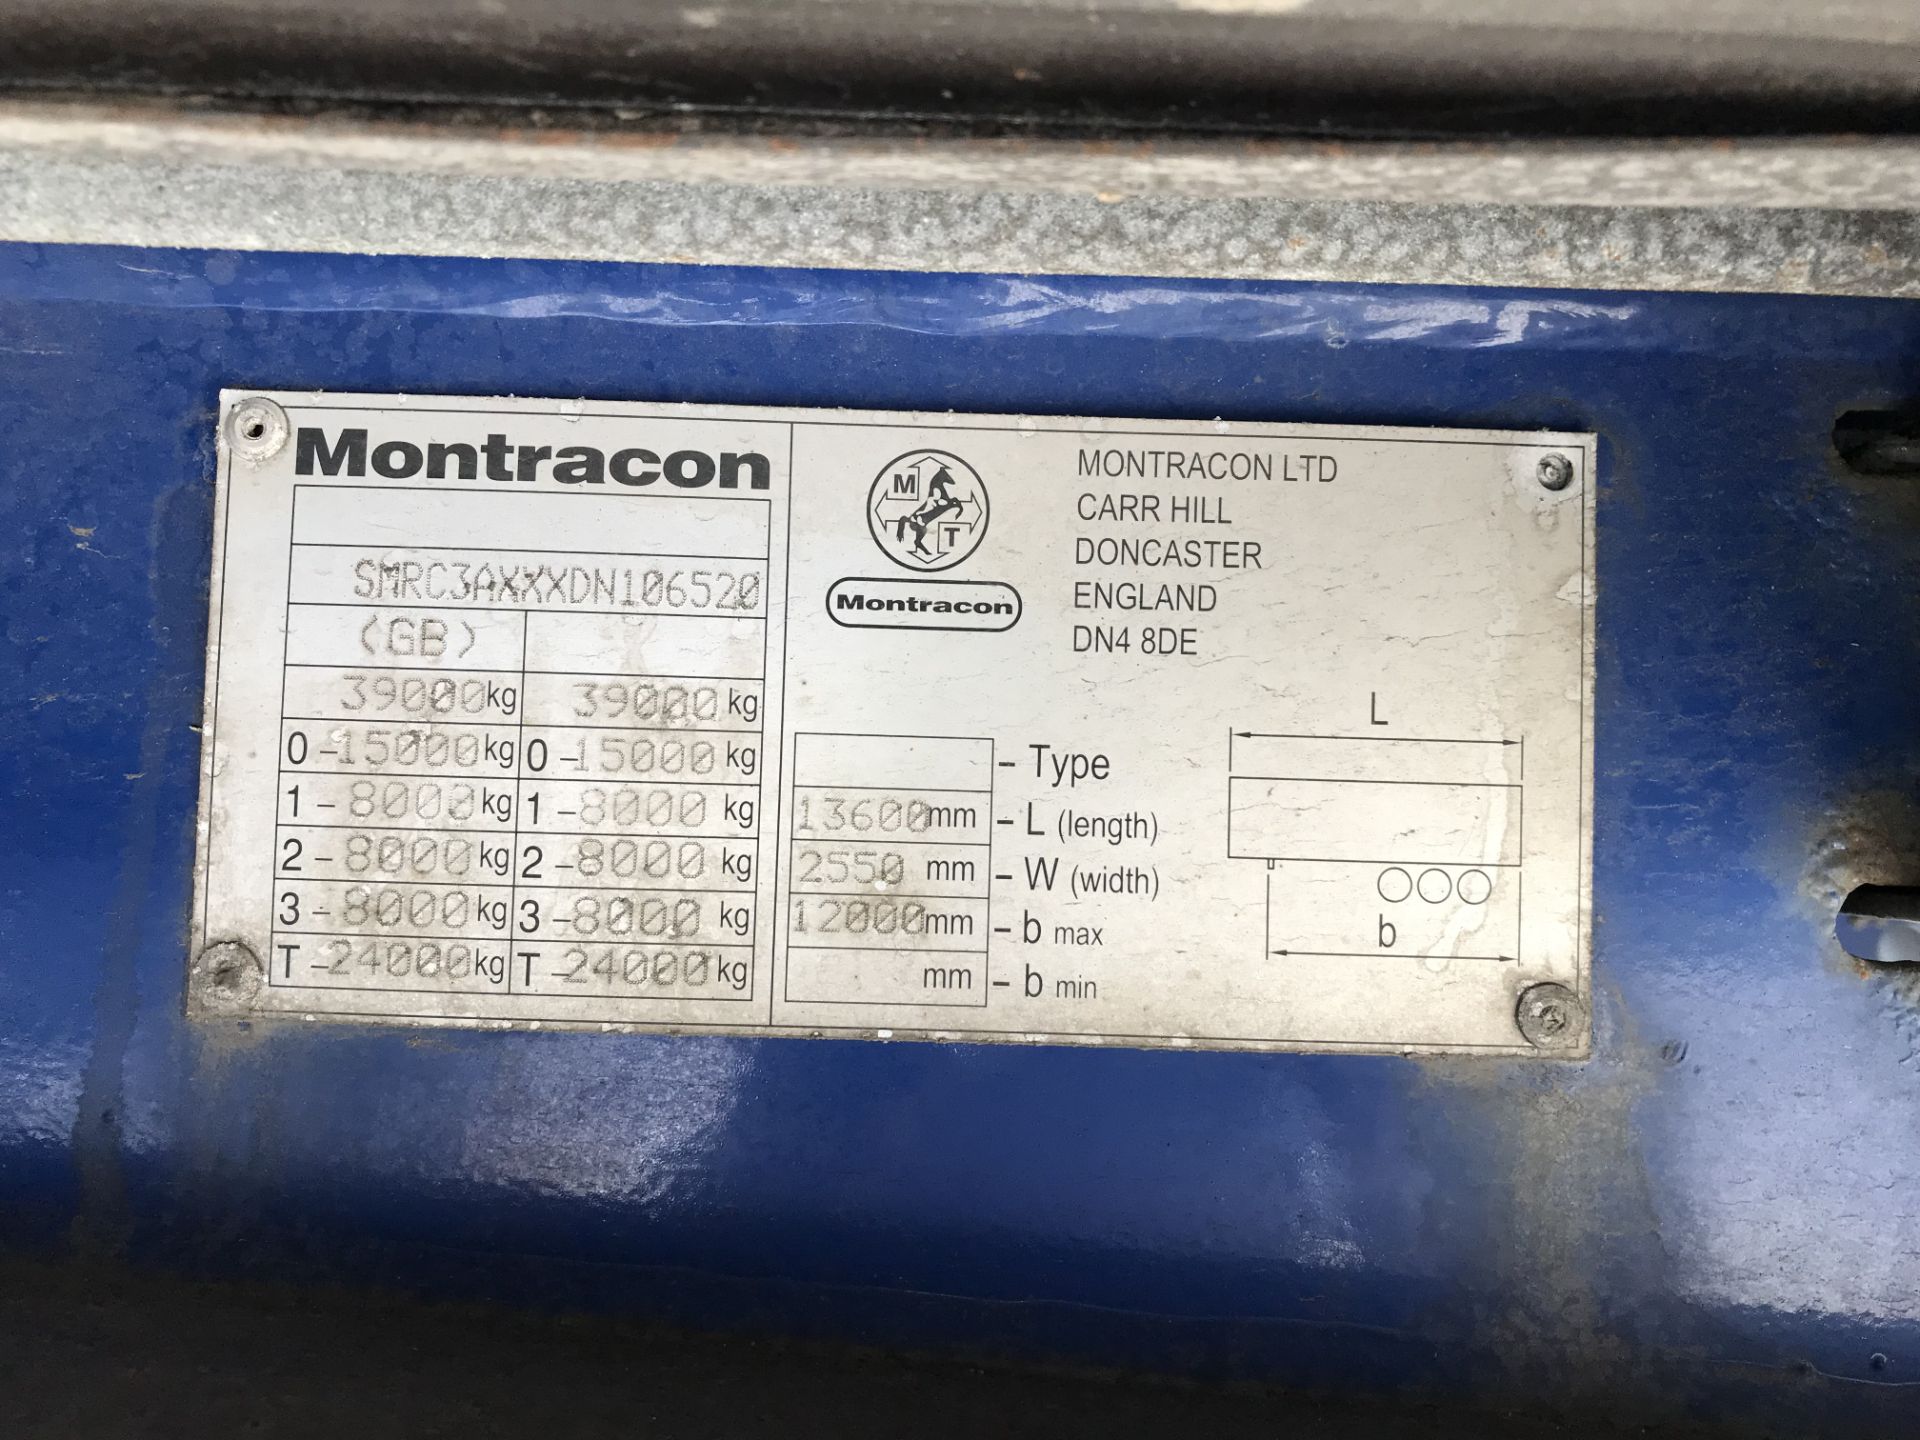 Montracon 13.6m Tri-Axle Curtainside Single Deck Semi-Trailer, chassis no. SMRC3AXXXDN106520, ID no. - Image 6 of 6